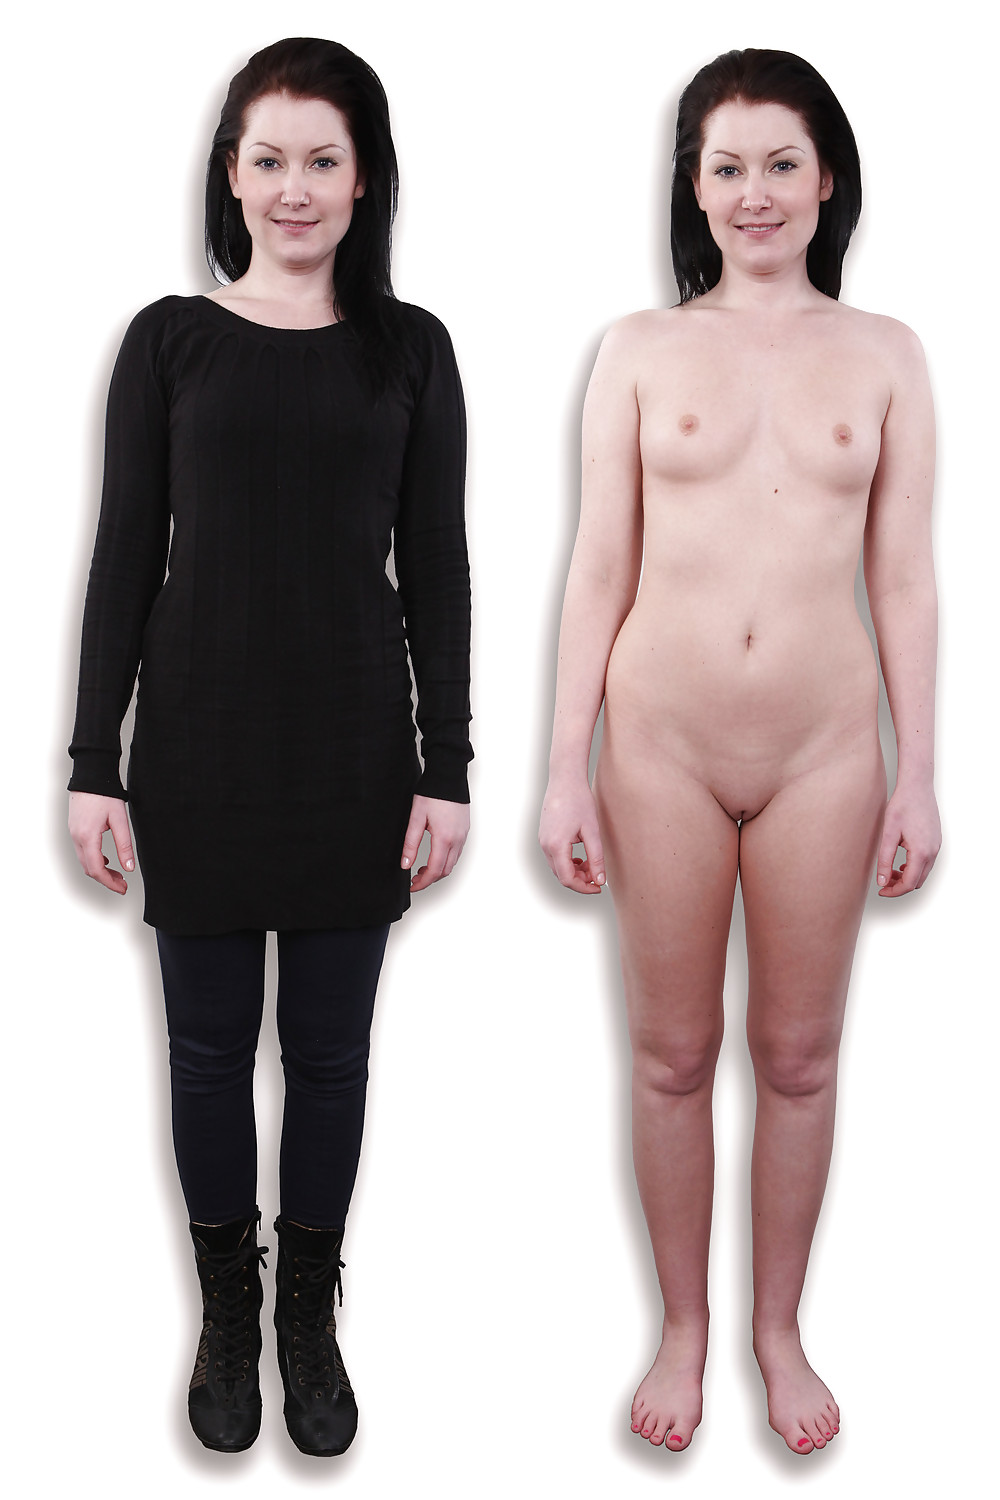 Sex Gallery 72 Huren aus Tschechien - clothed & nude